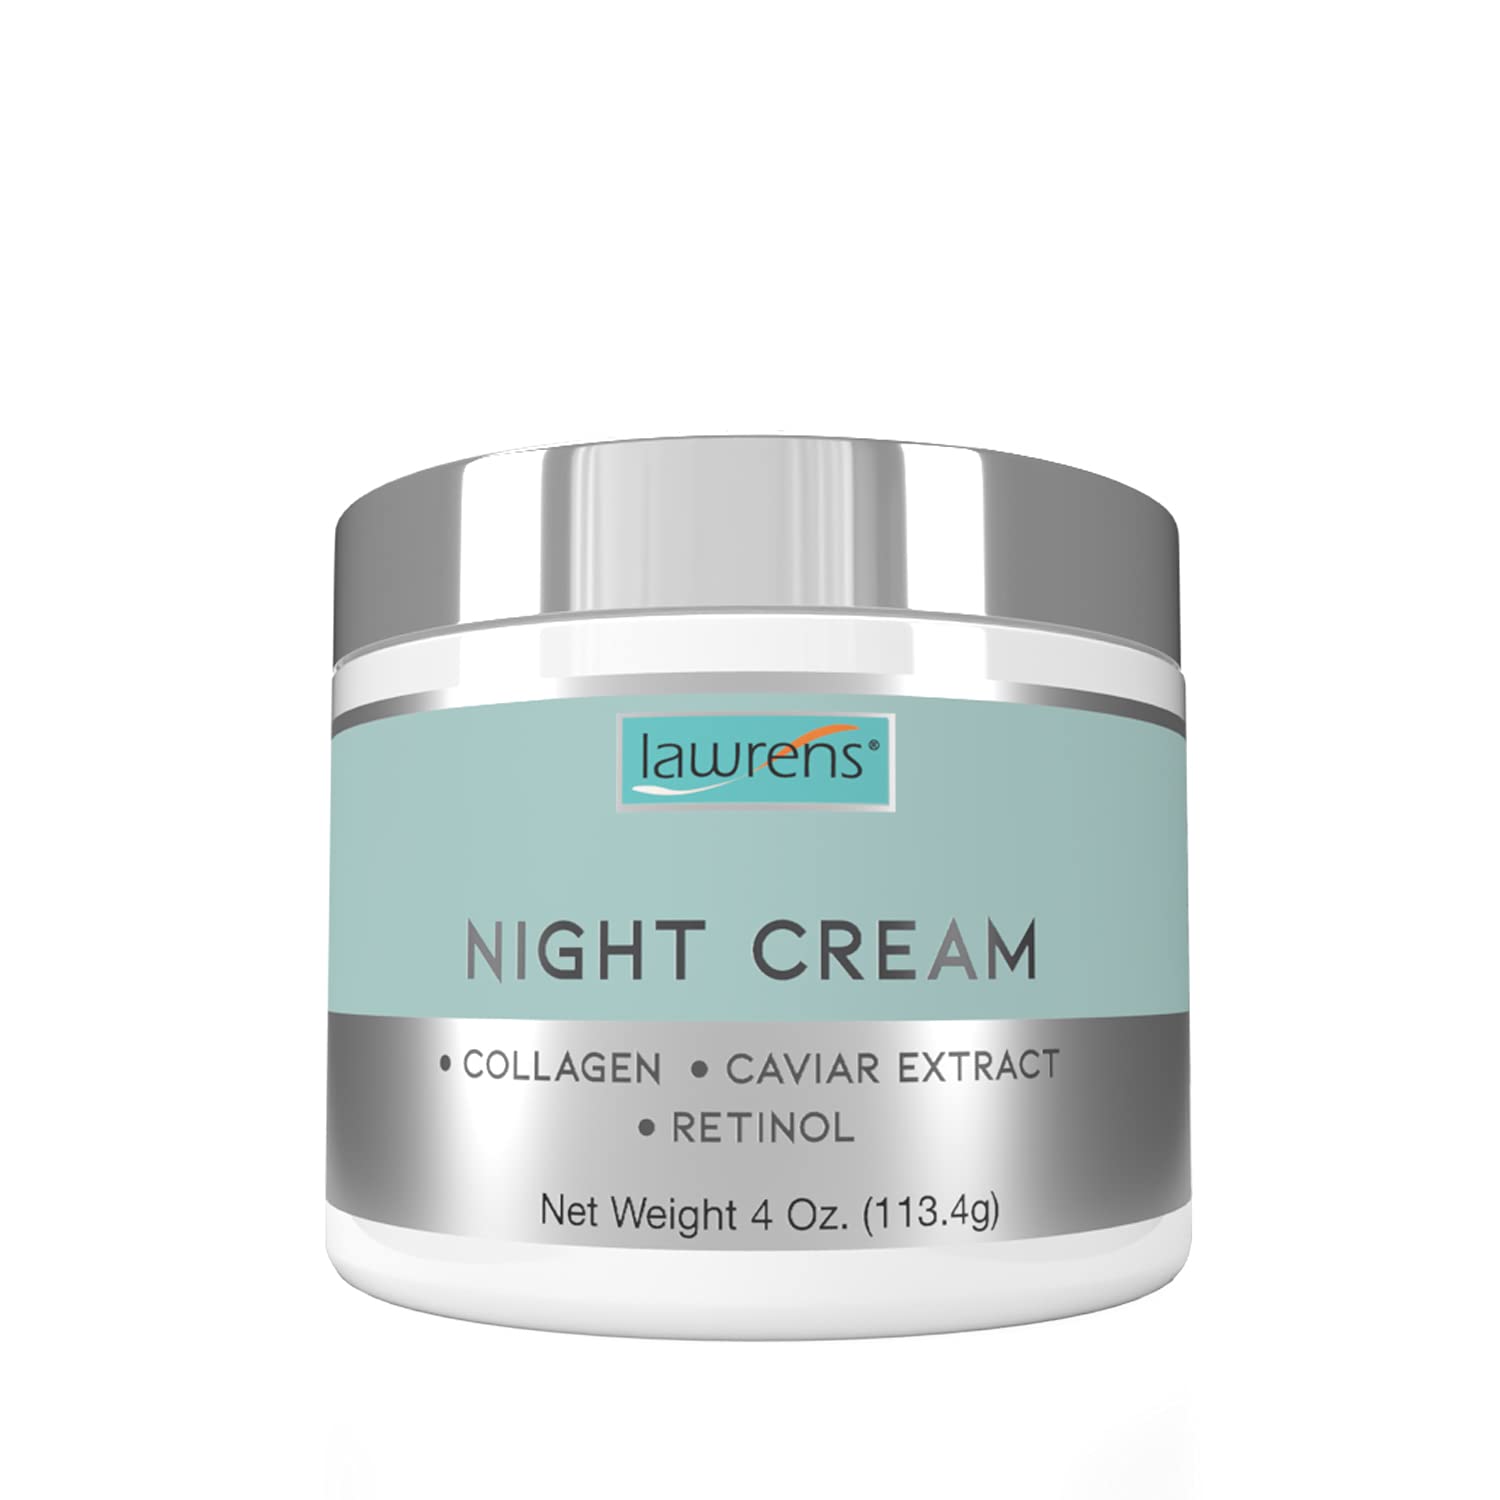 Night Cream with Collagen, Caviar Extract & Retinol - repair and moisturize skin at night - 4 oz